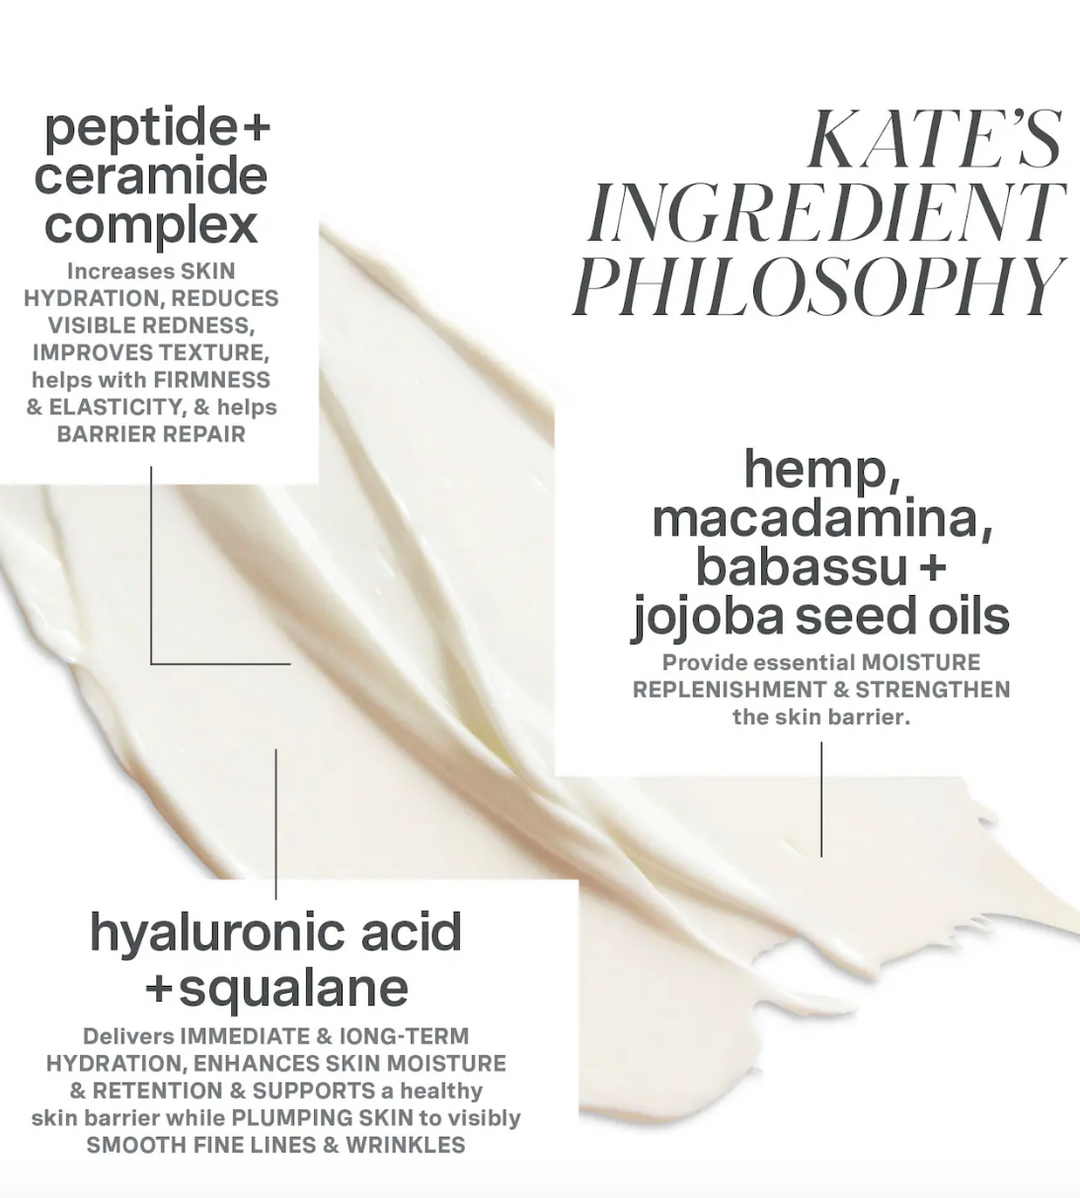 Kate Somerville Kateceuticals Total Repair Cream Size: 1 fl oz